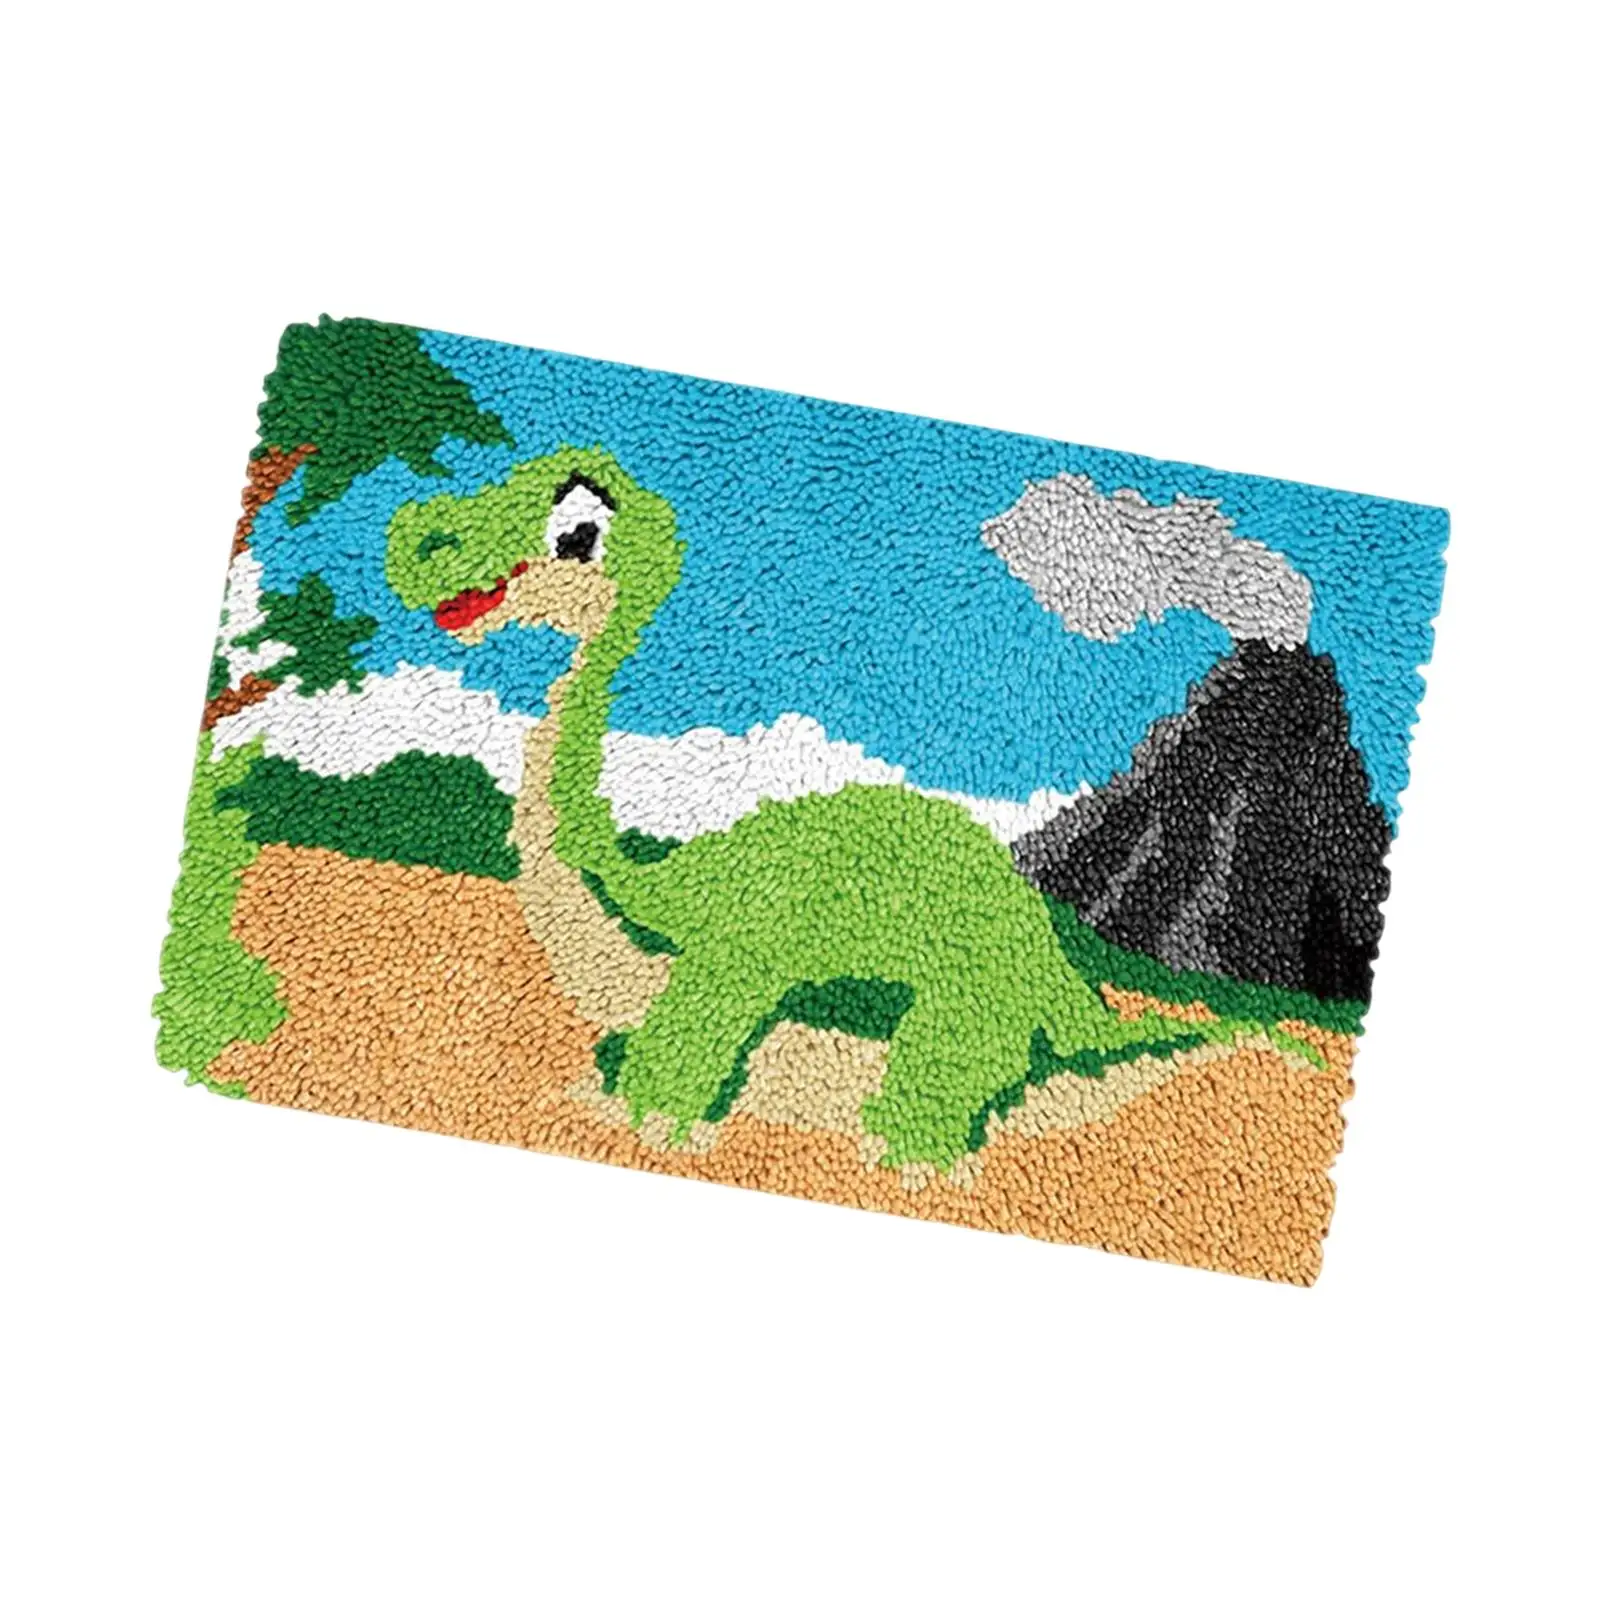 Dinosaur Latch Hook Rug Kits Door Mat Needlework Unfinished Tapestry DIY Rug Making Kits Crochet Yarn for Beginners